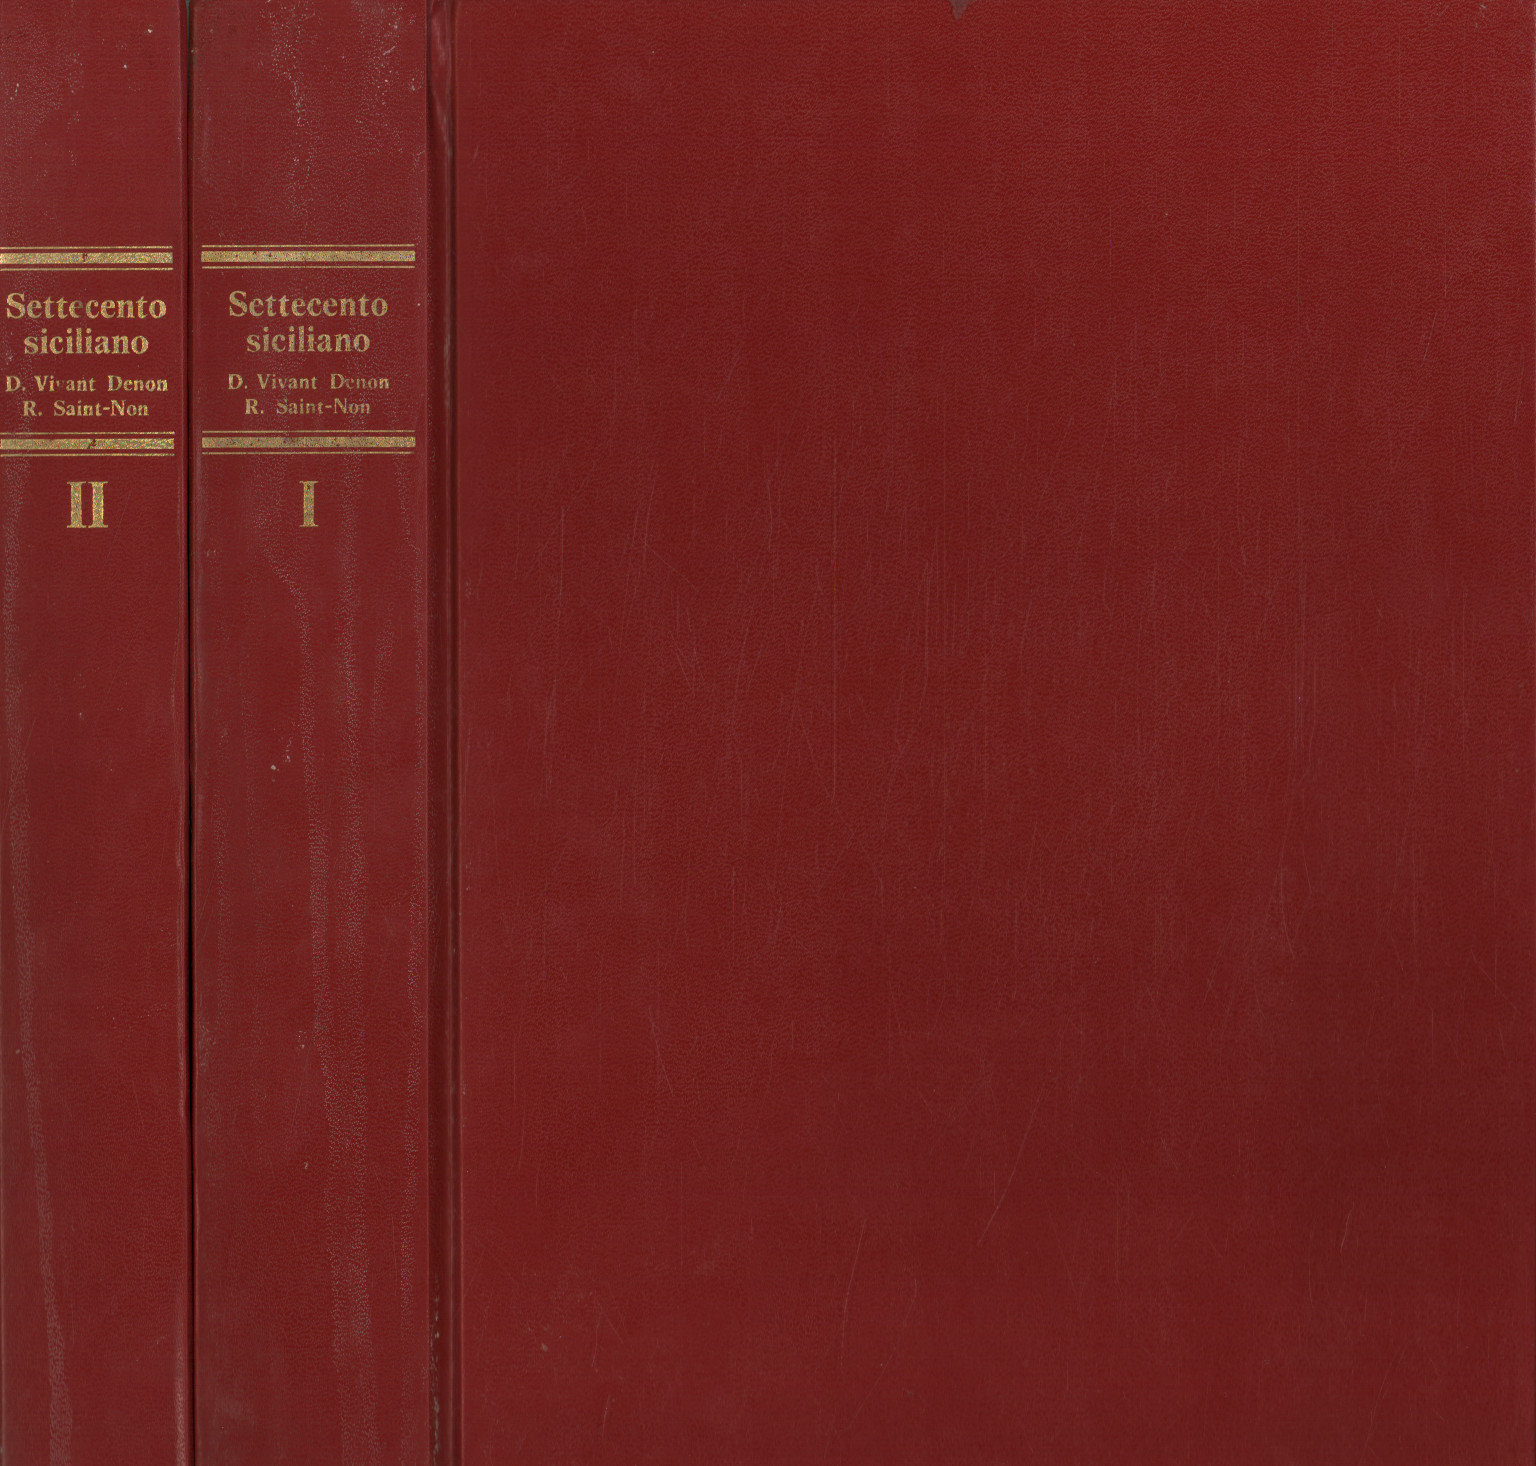 Siglo XVIII siciliano (2 volúmenes)